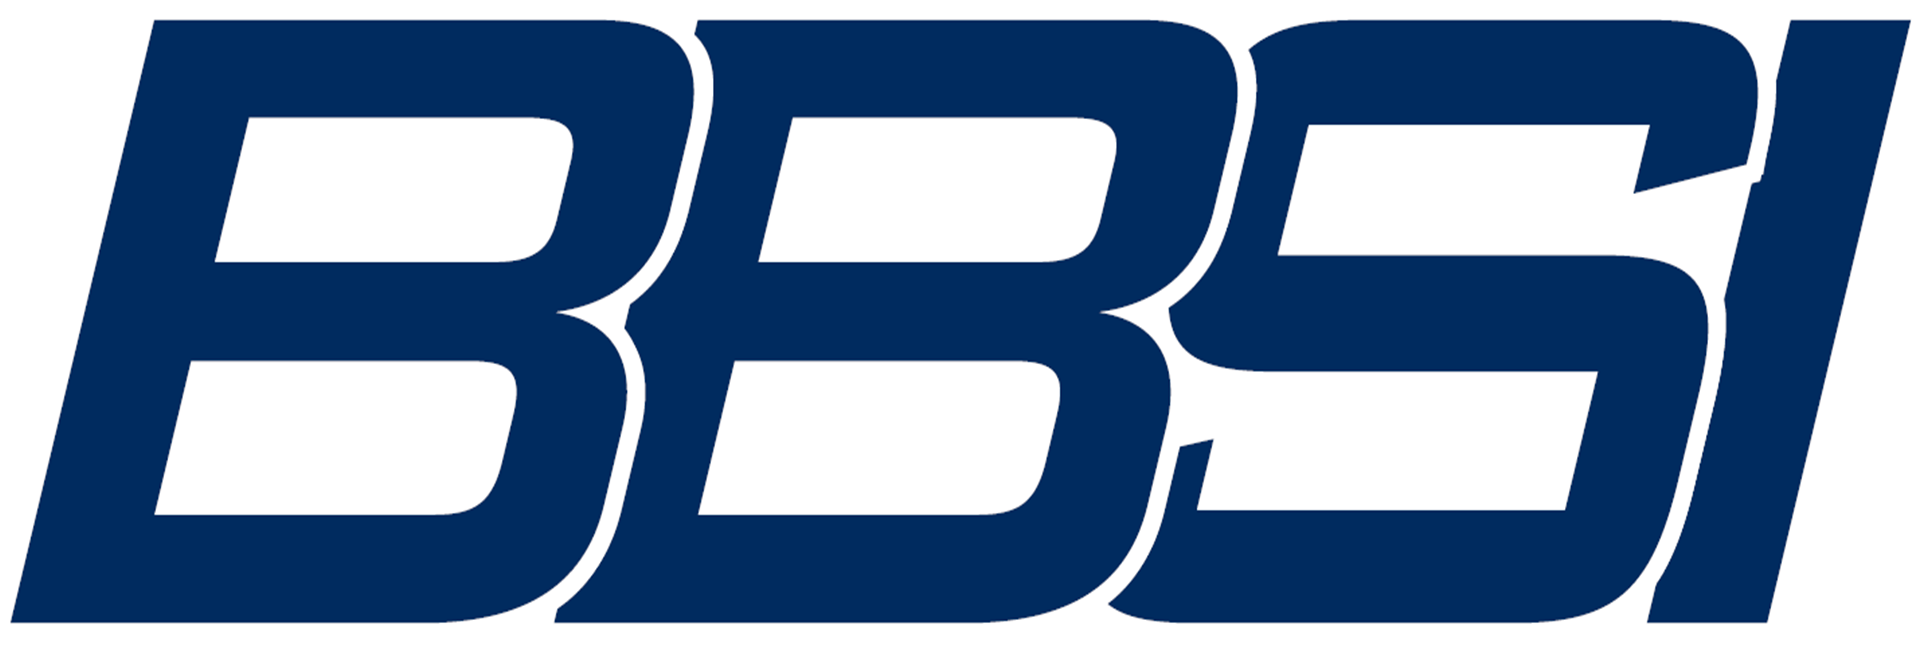 BBSI Logo (2)